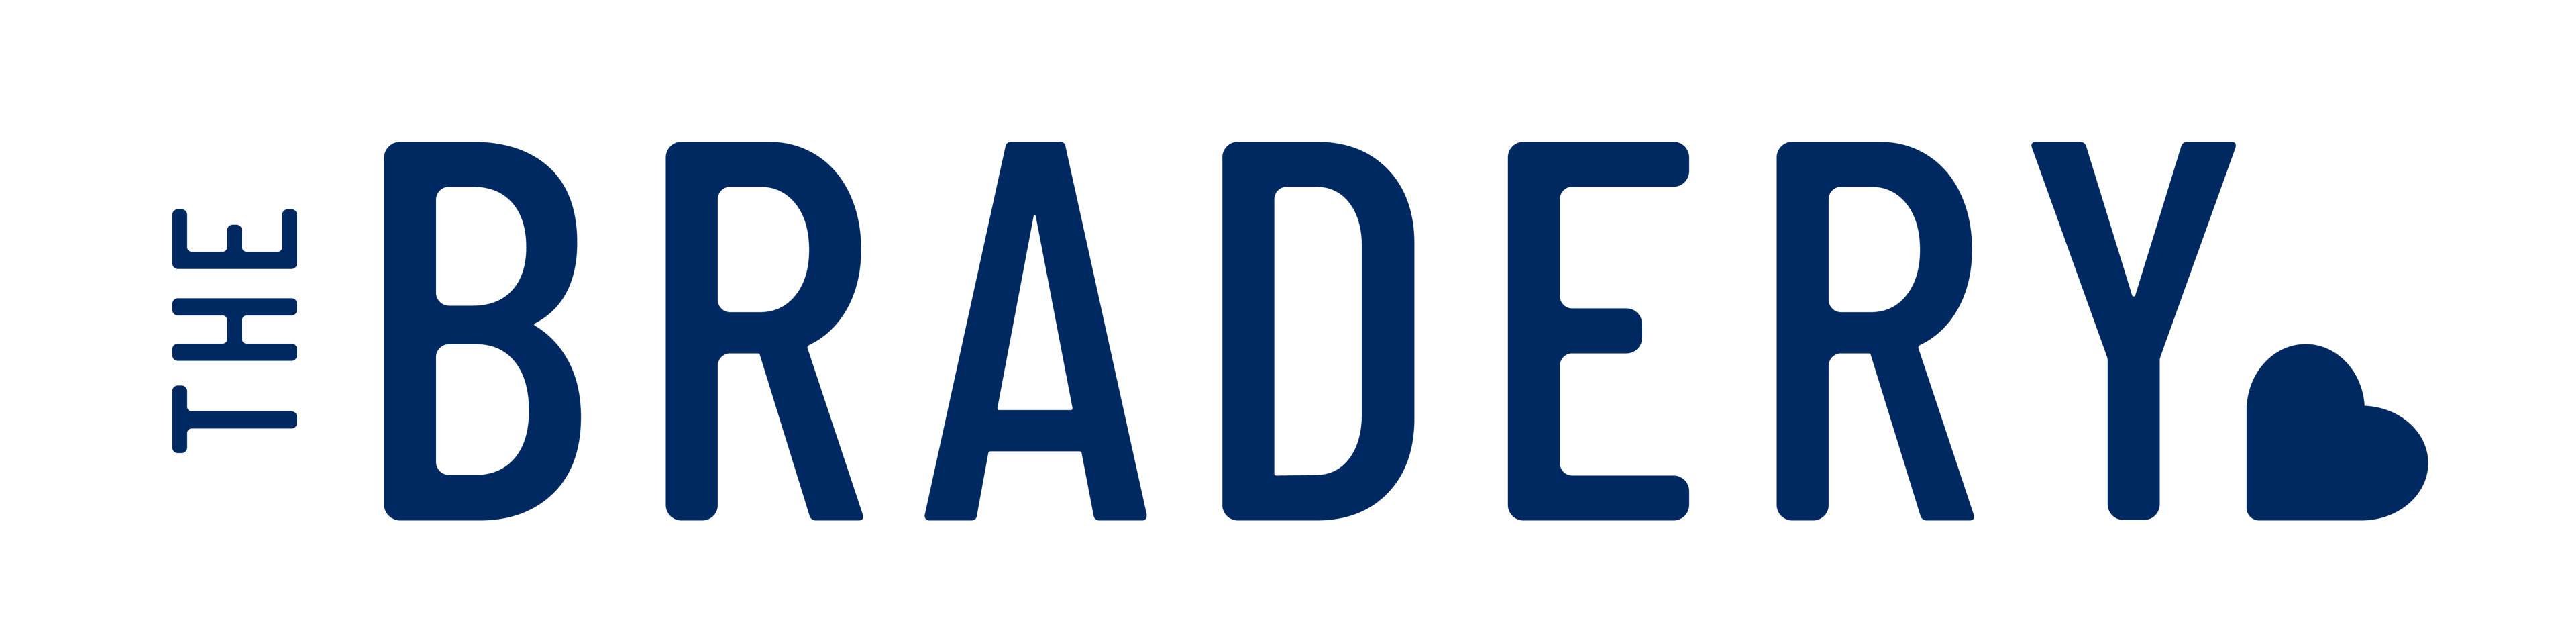 The Bradery logo